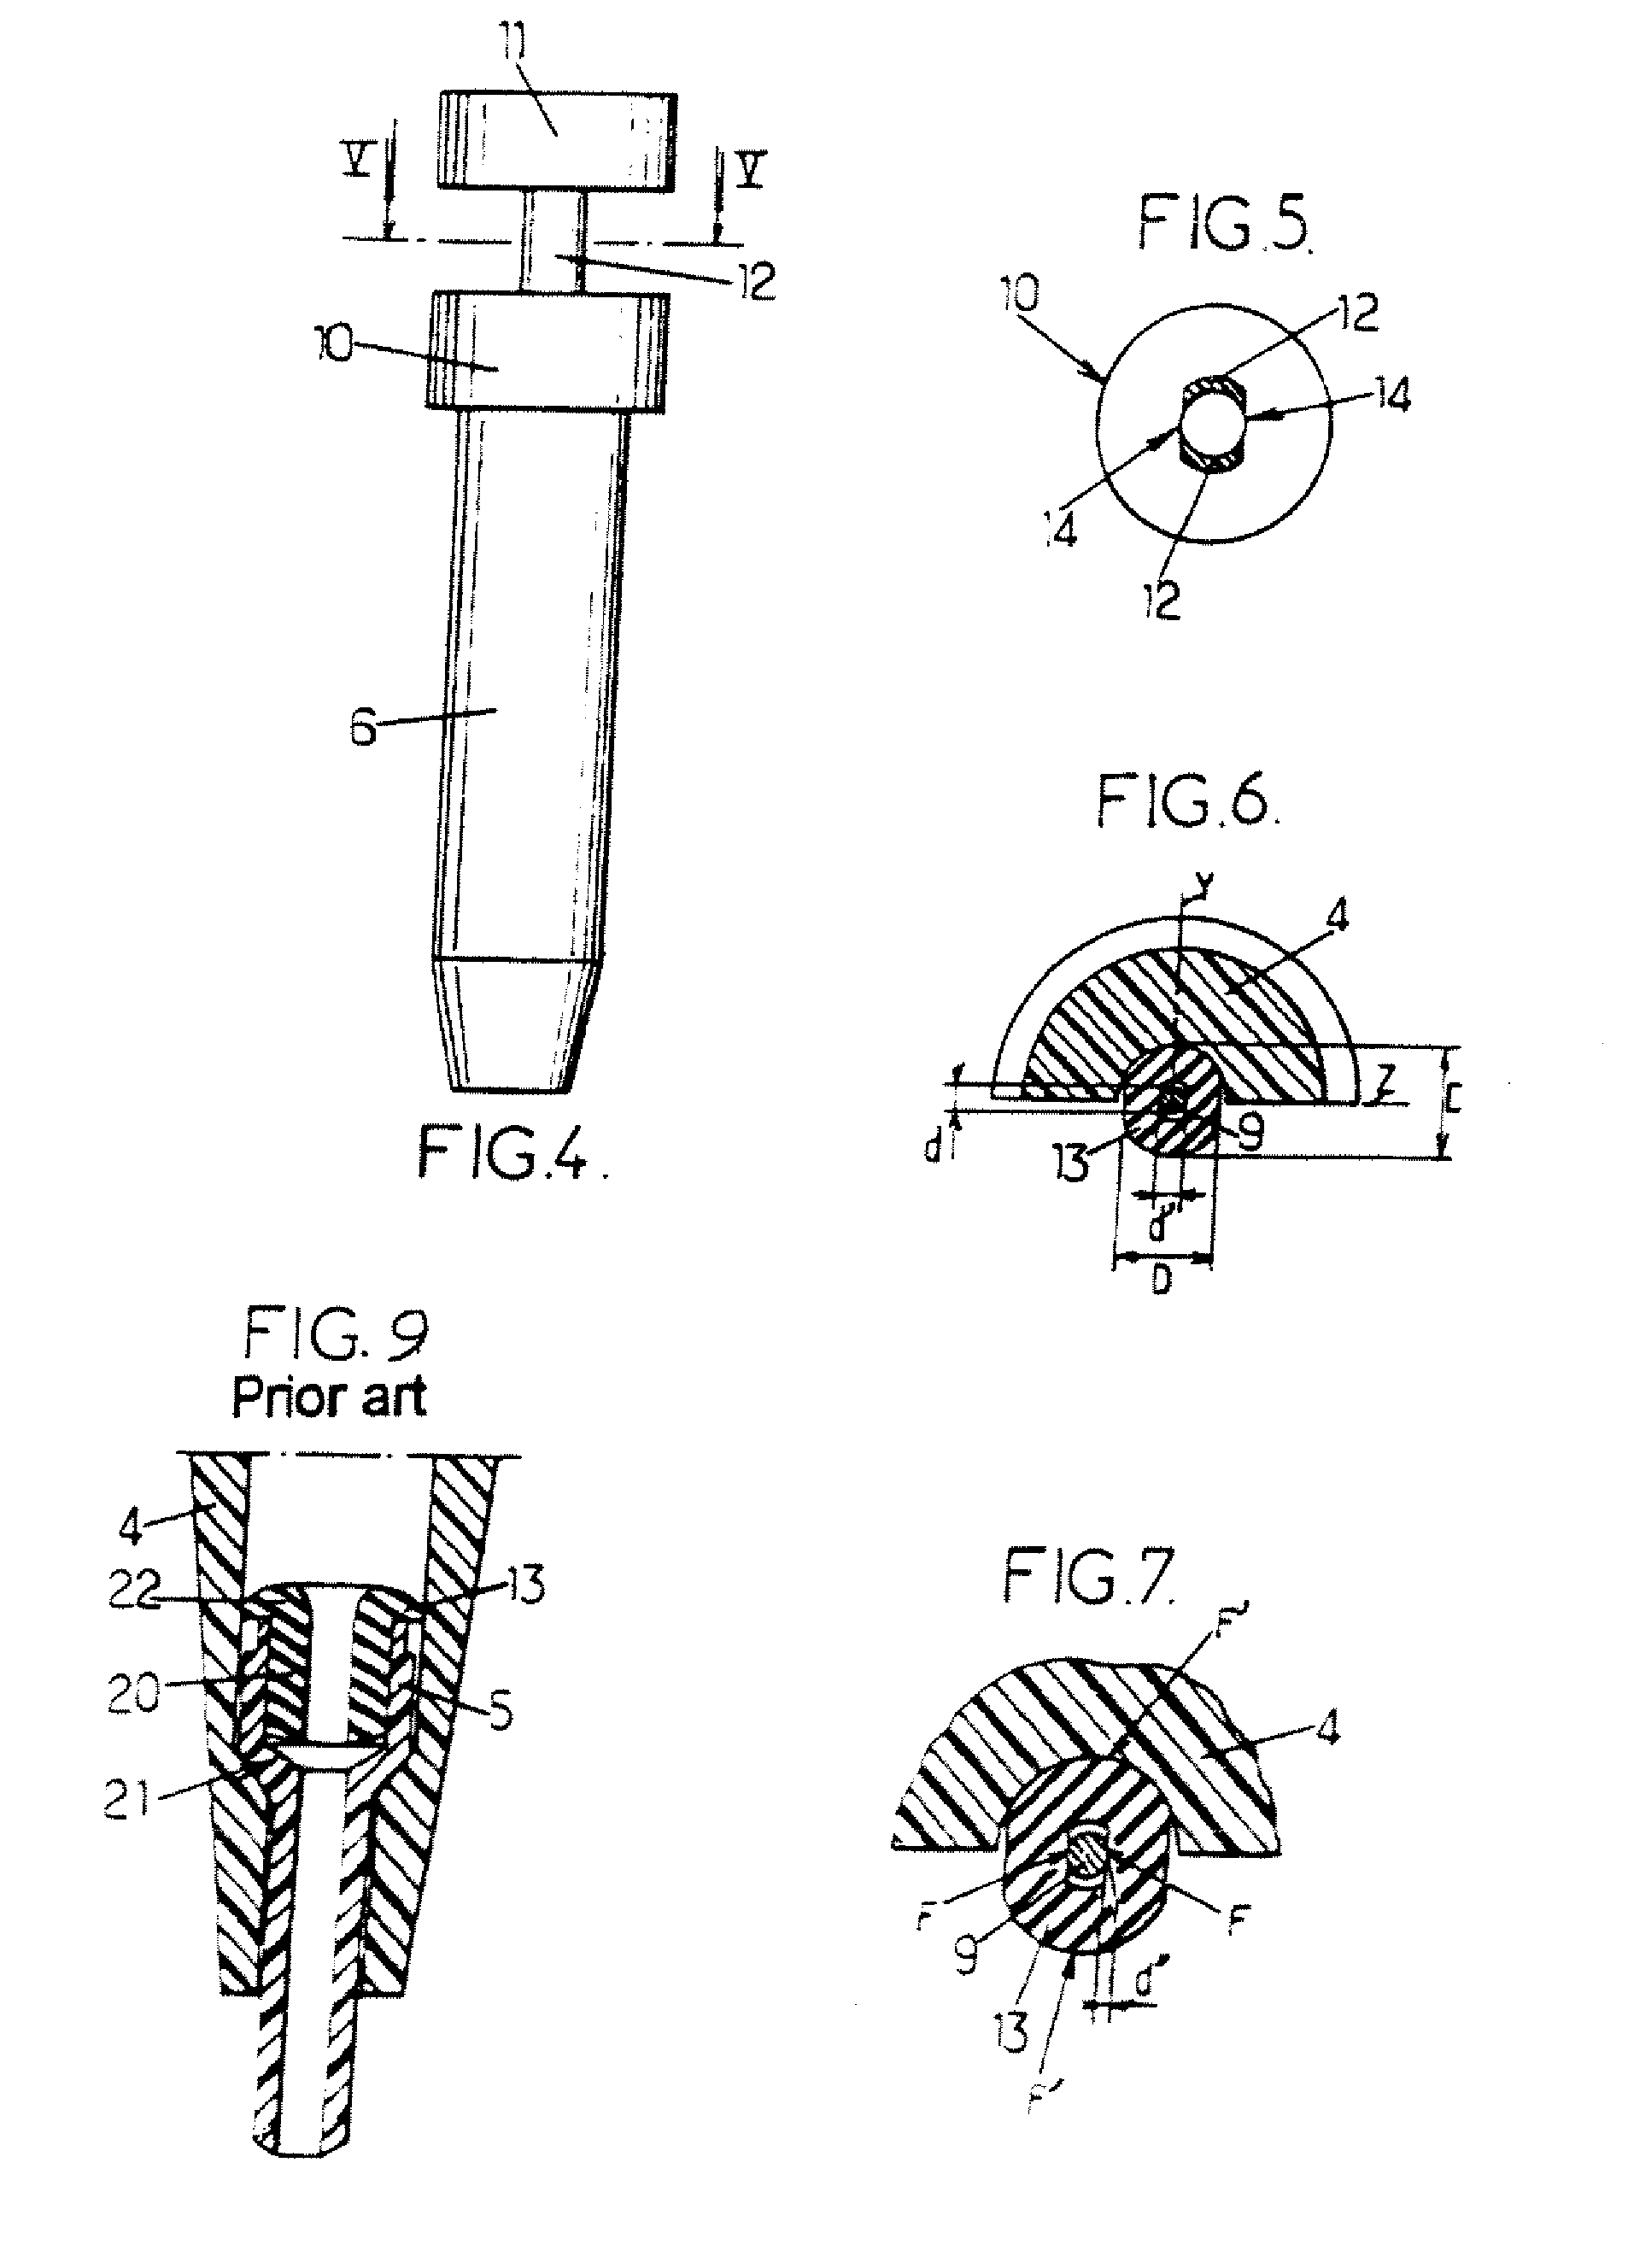 Mechanical pencil comprising a retractable lead guide